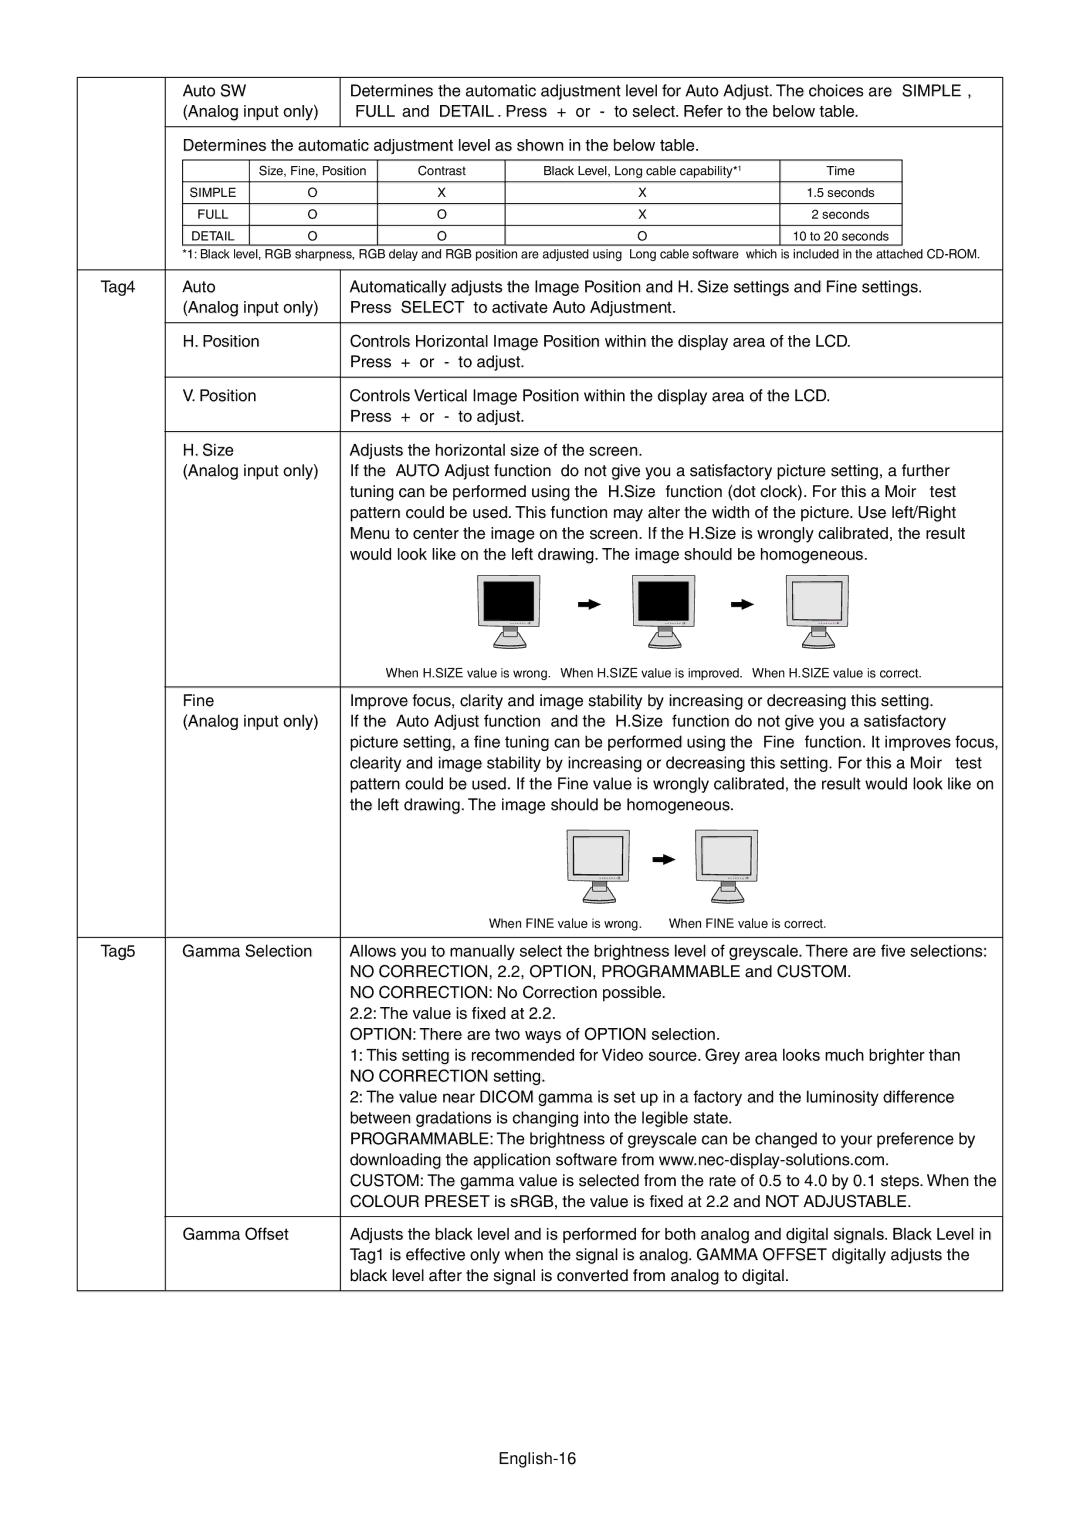 StarTech.com LCD2180UX user manual Tag5 Gamma Selection, English-16 